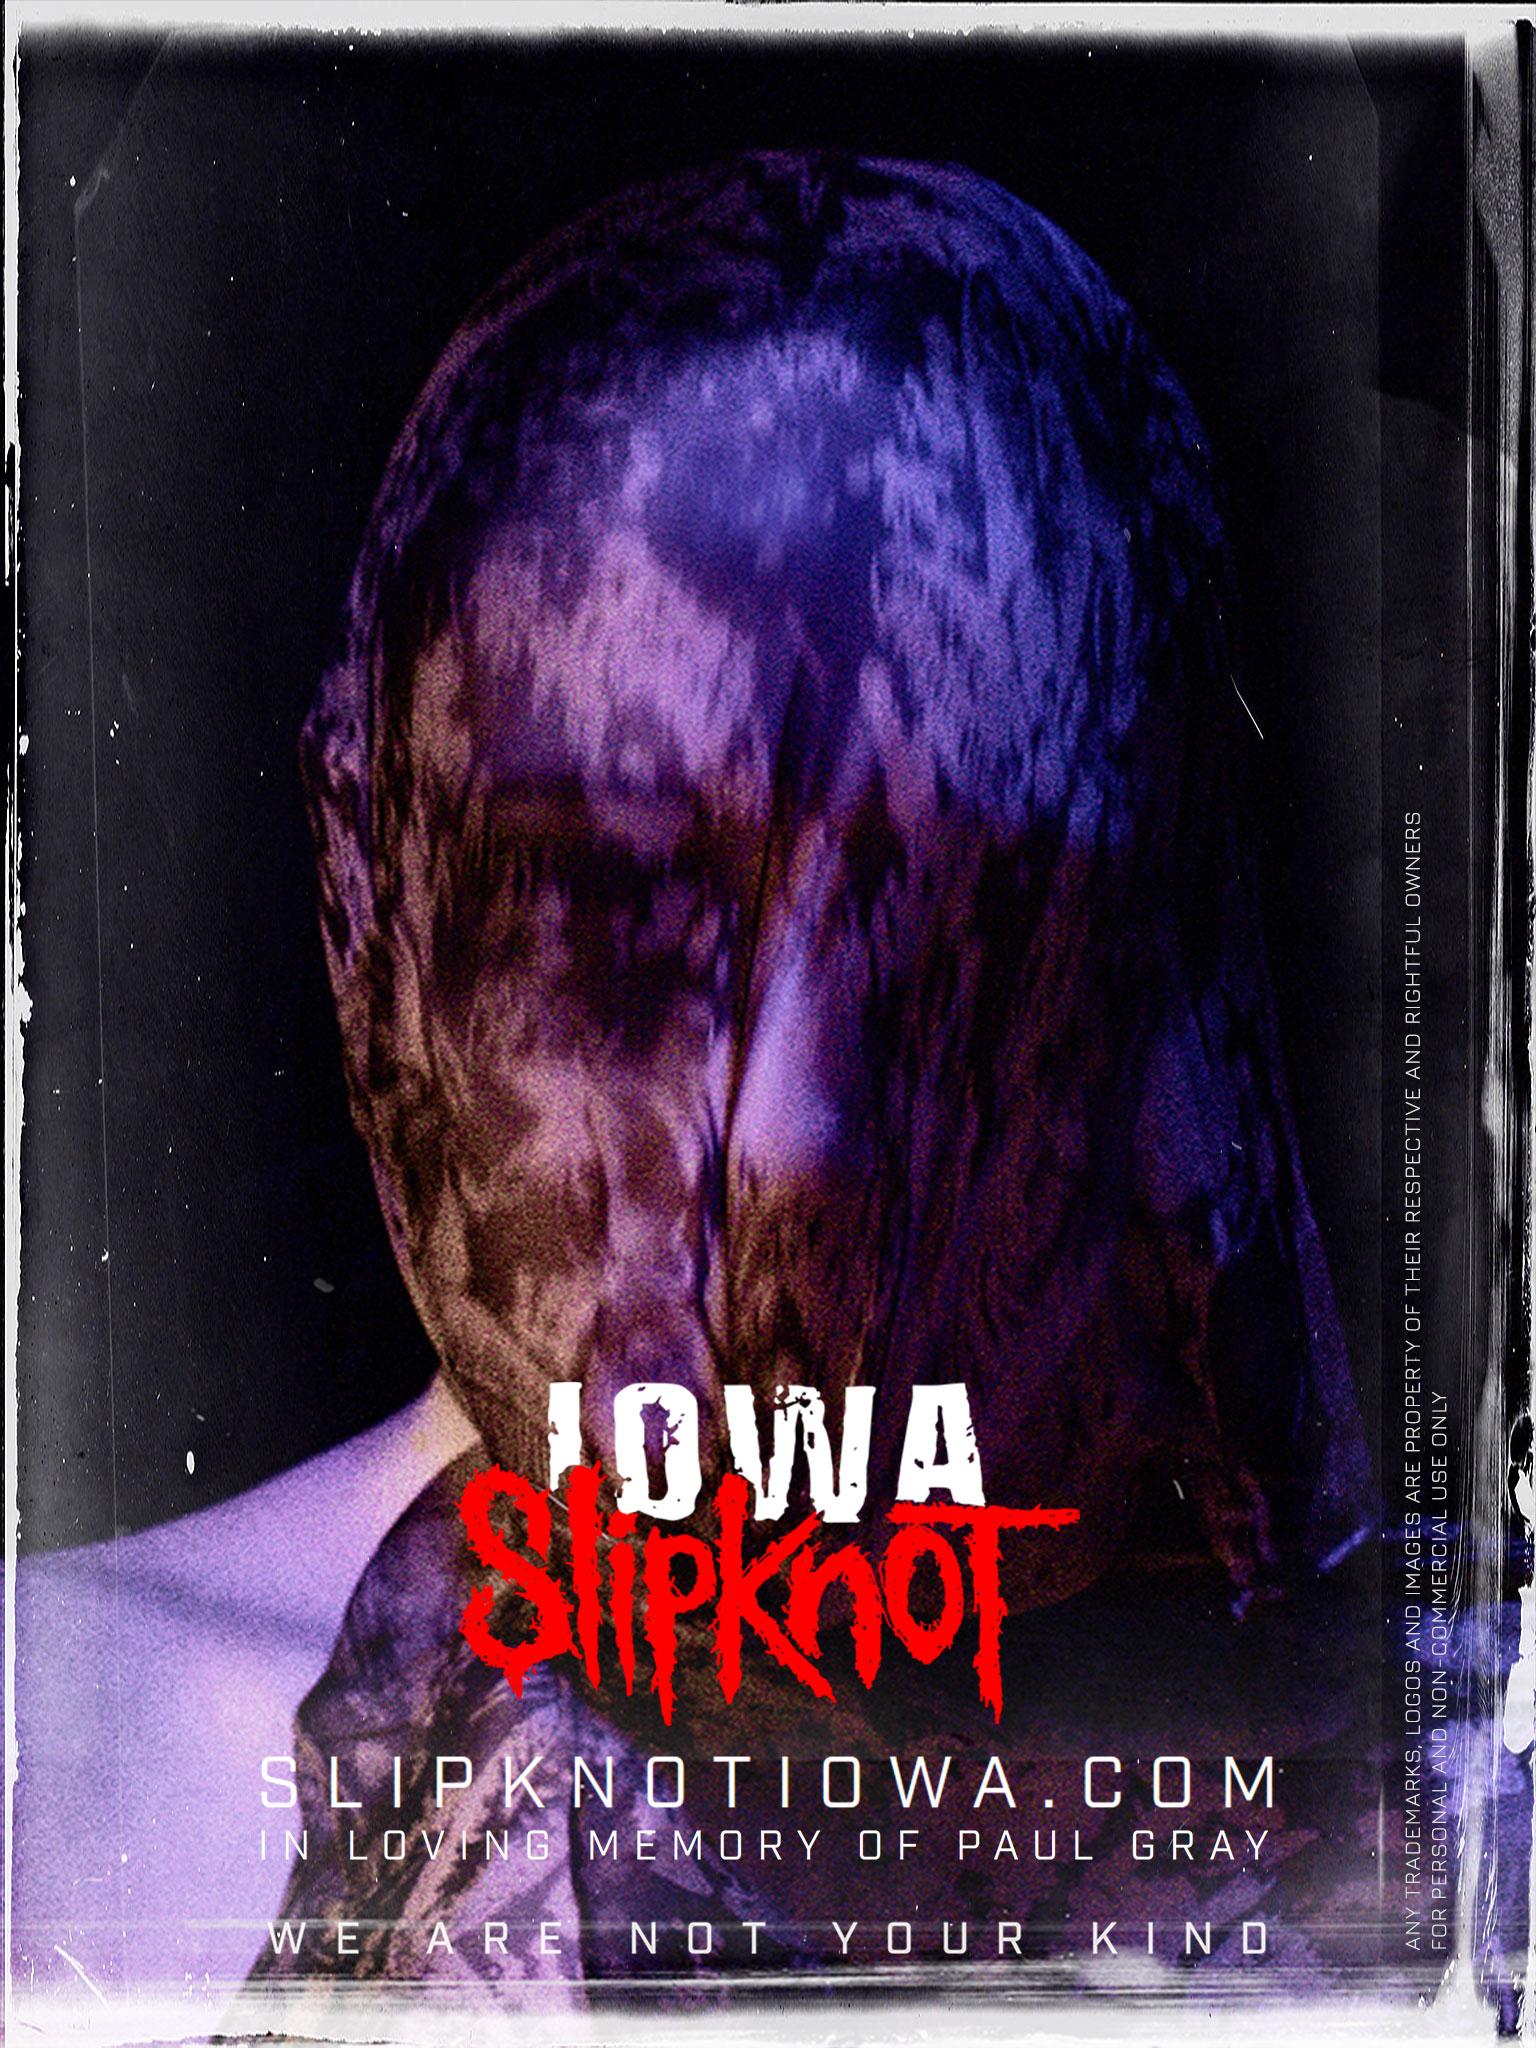 Slipknot kind. Slipknot альбом we are not your kind. Обложка последнего альбома Slipknot. Slipknot we are not your kind обложка.